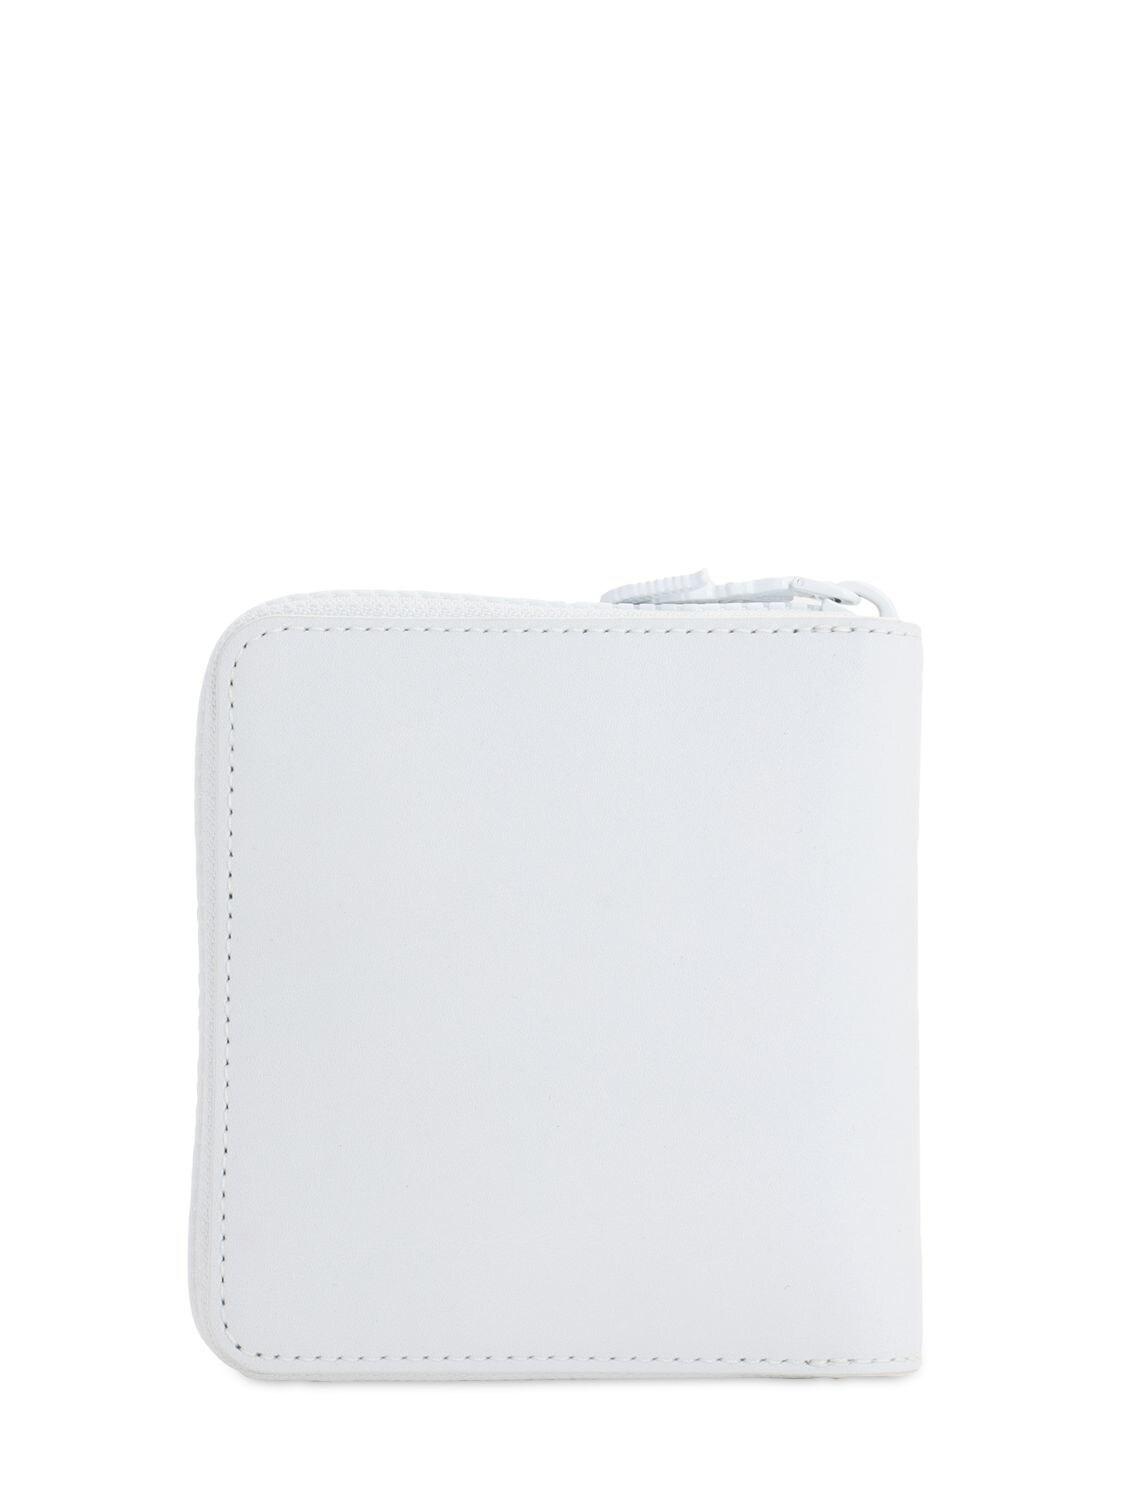 Lacoste Jean-michel Tixier Croco Leather Wallet in White for Men - Lyst